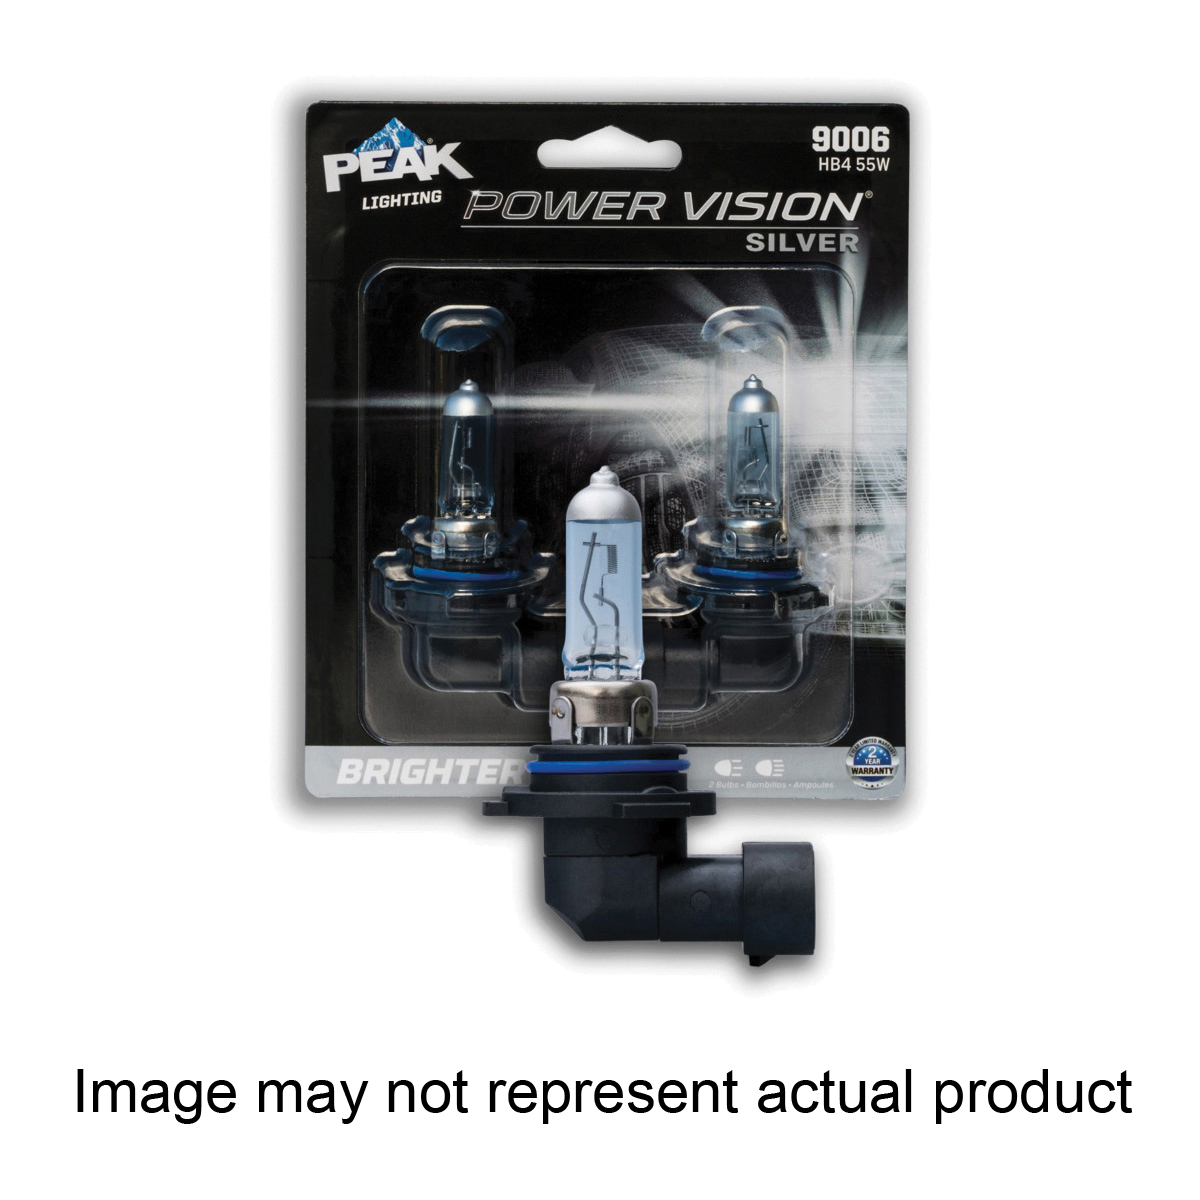 PEAK Power Vision H7-55WPVS-2BPP Automotive Bulb, 13.2 V, 55 W, Halogen Lamp, Right Angle Pre-Focus Base - 1